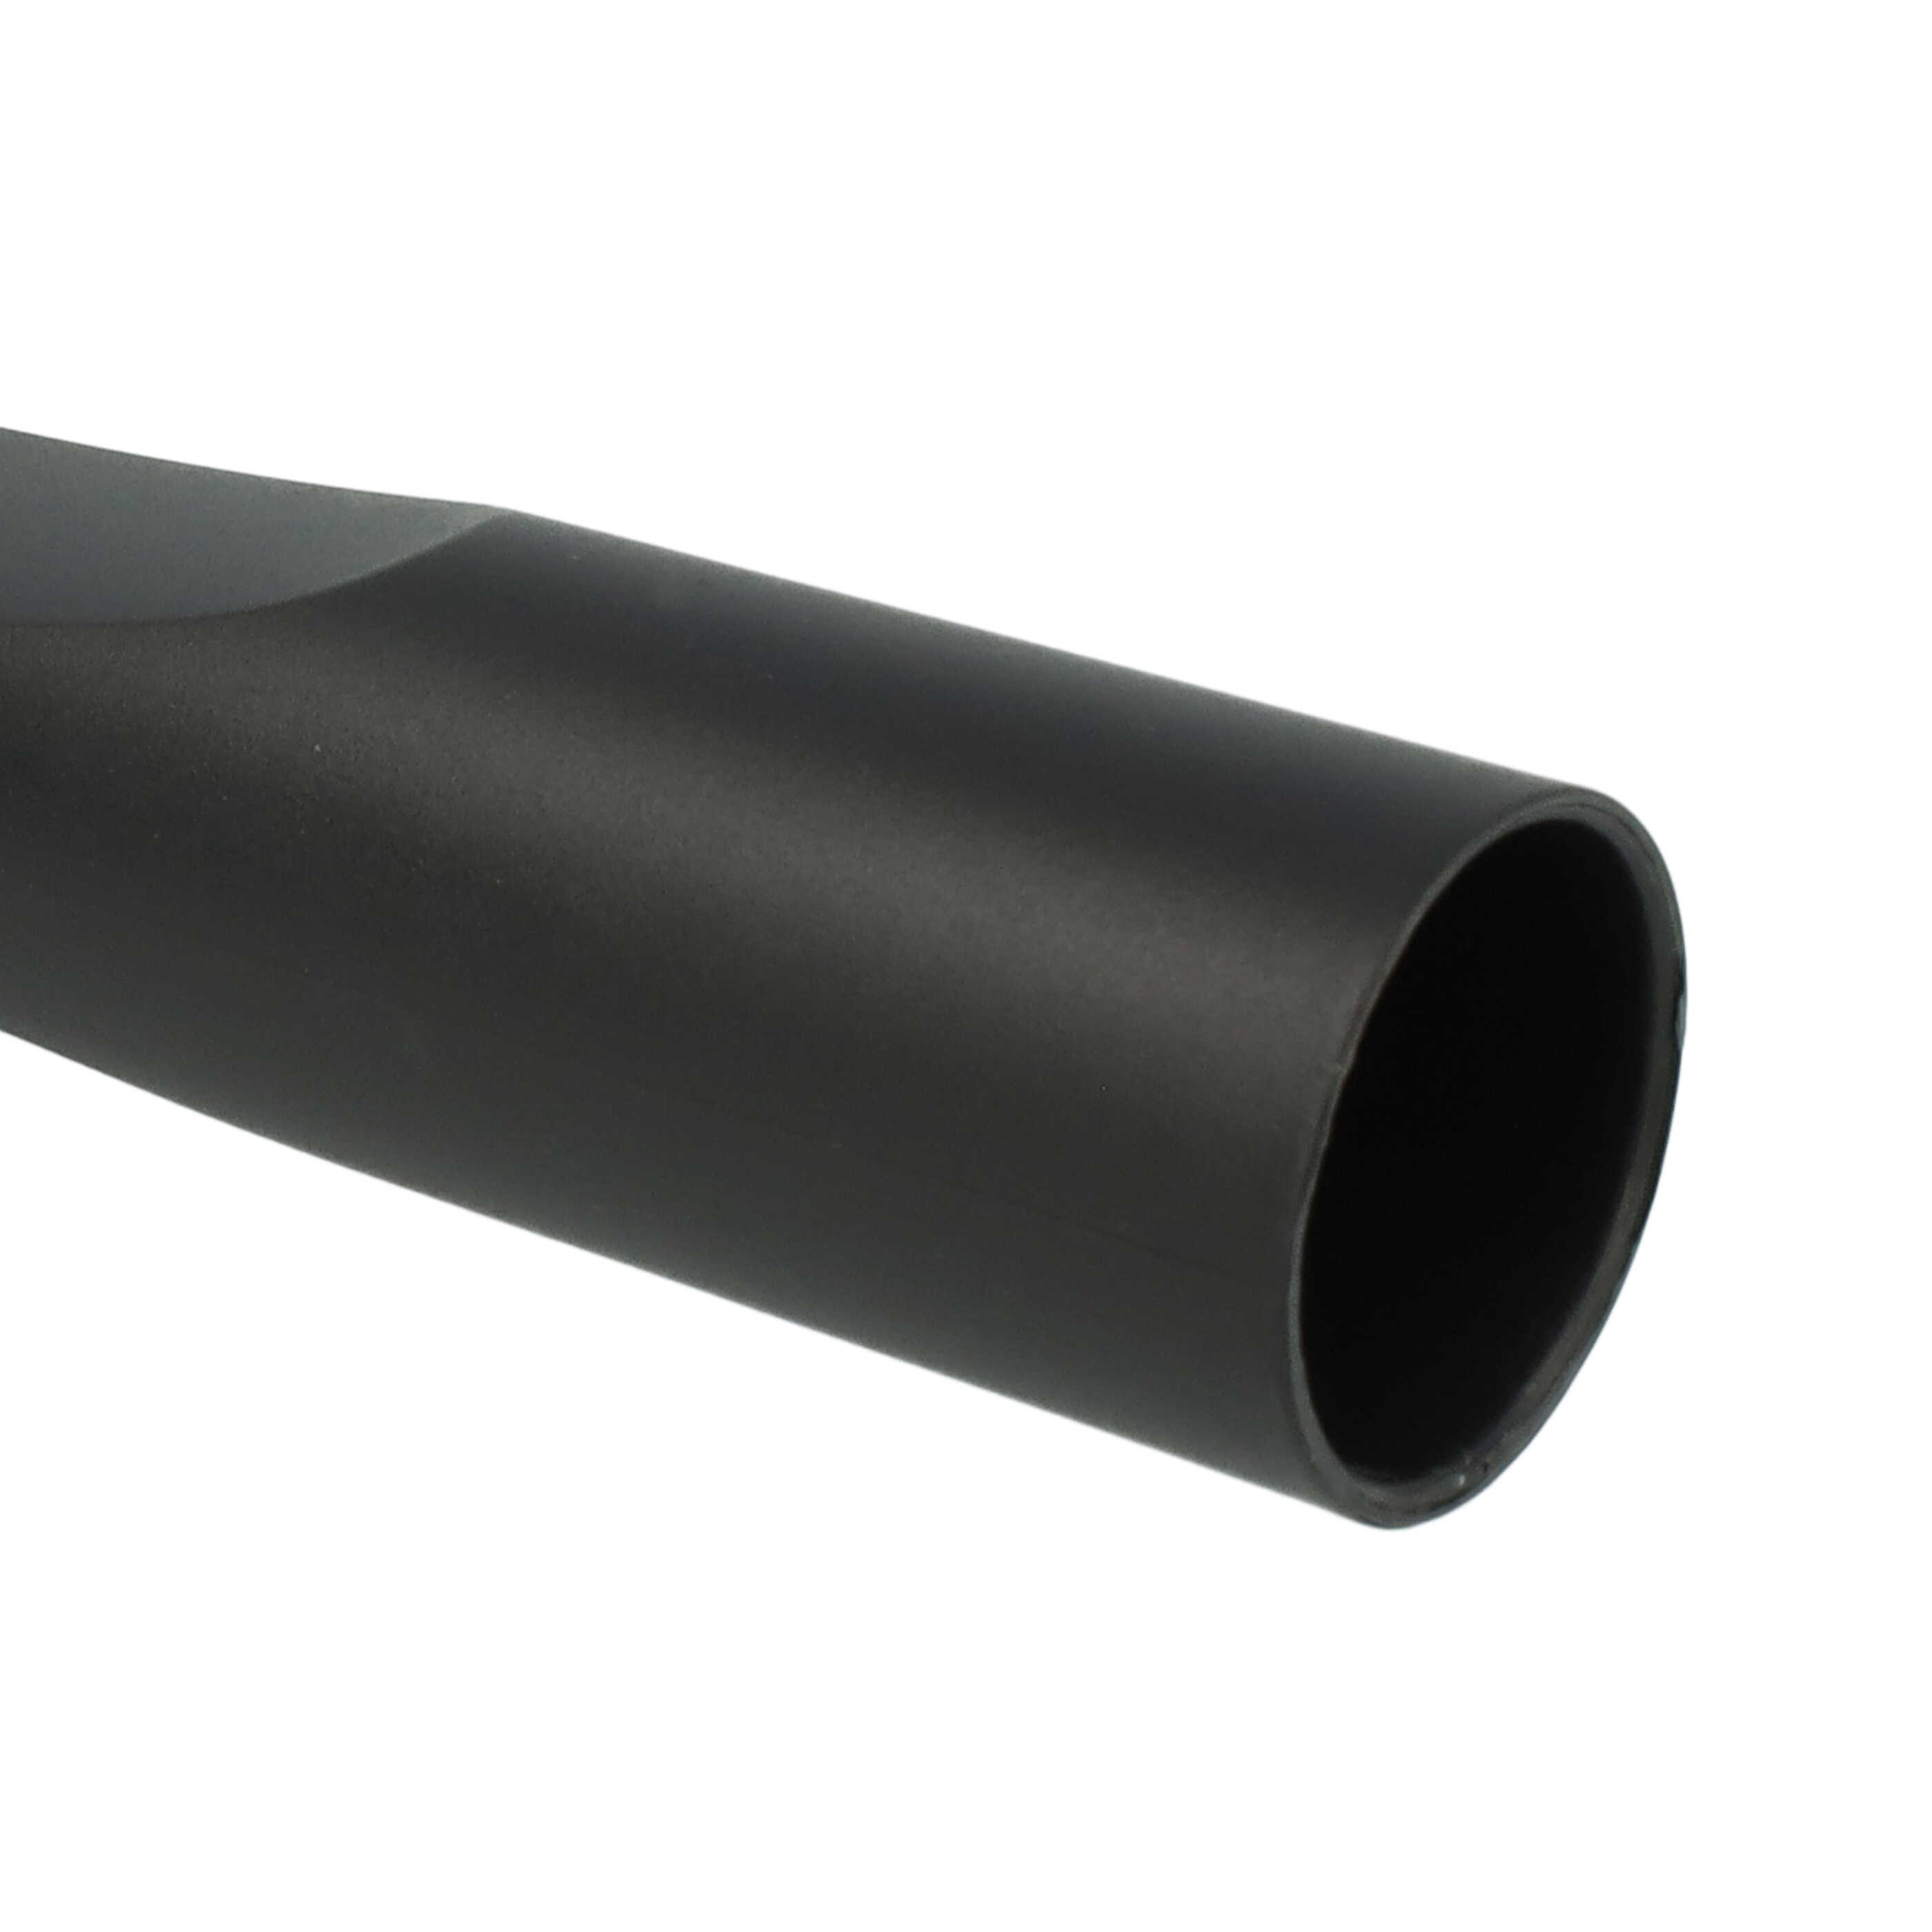 Vacuum Cleaner Crevice Nozzle 30 mm suitable for AEG, Bosch etc. - 17 cm